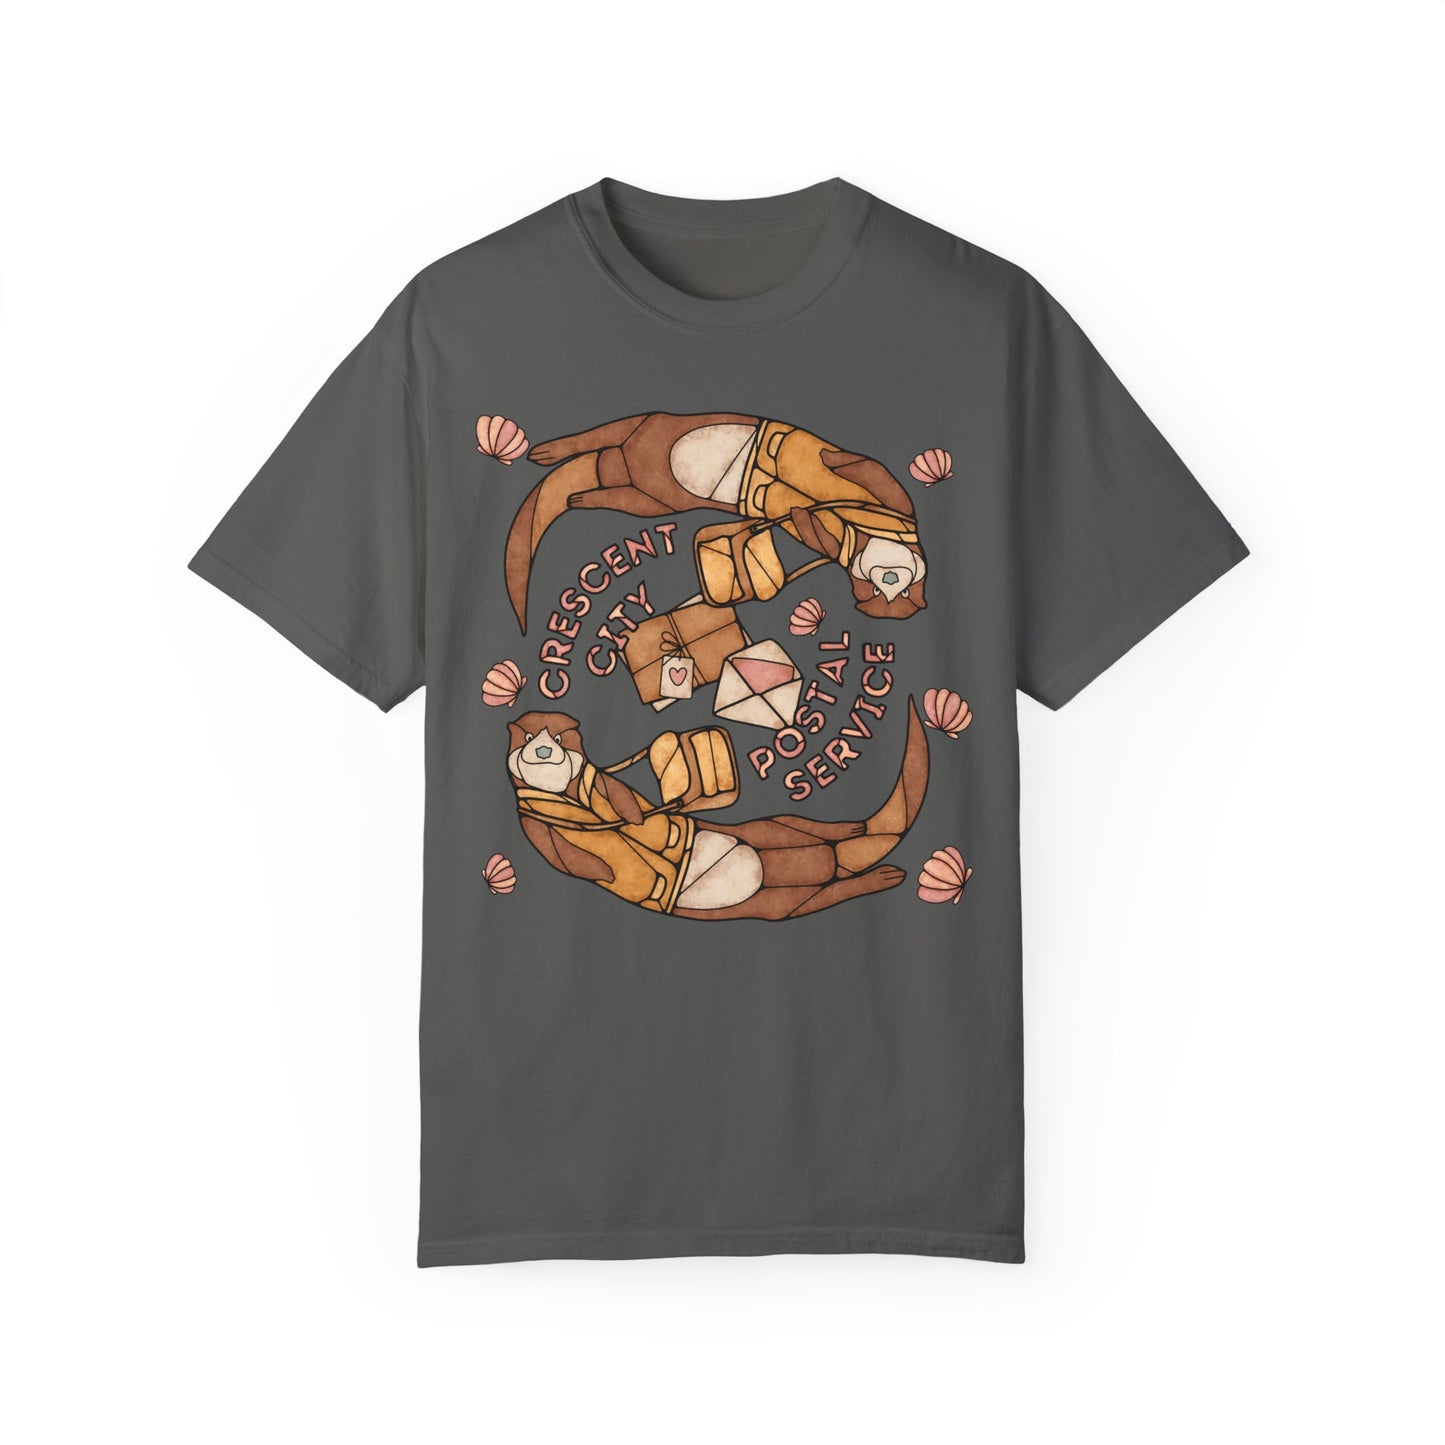 Crescent City Shirt - Postal Service Otters - Bookish Tee